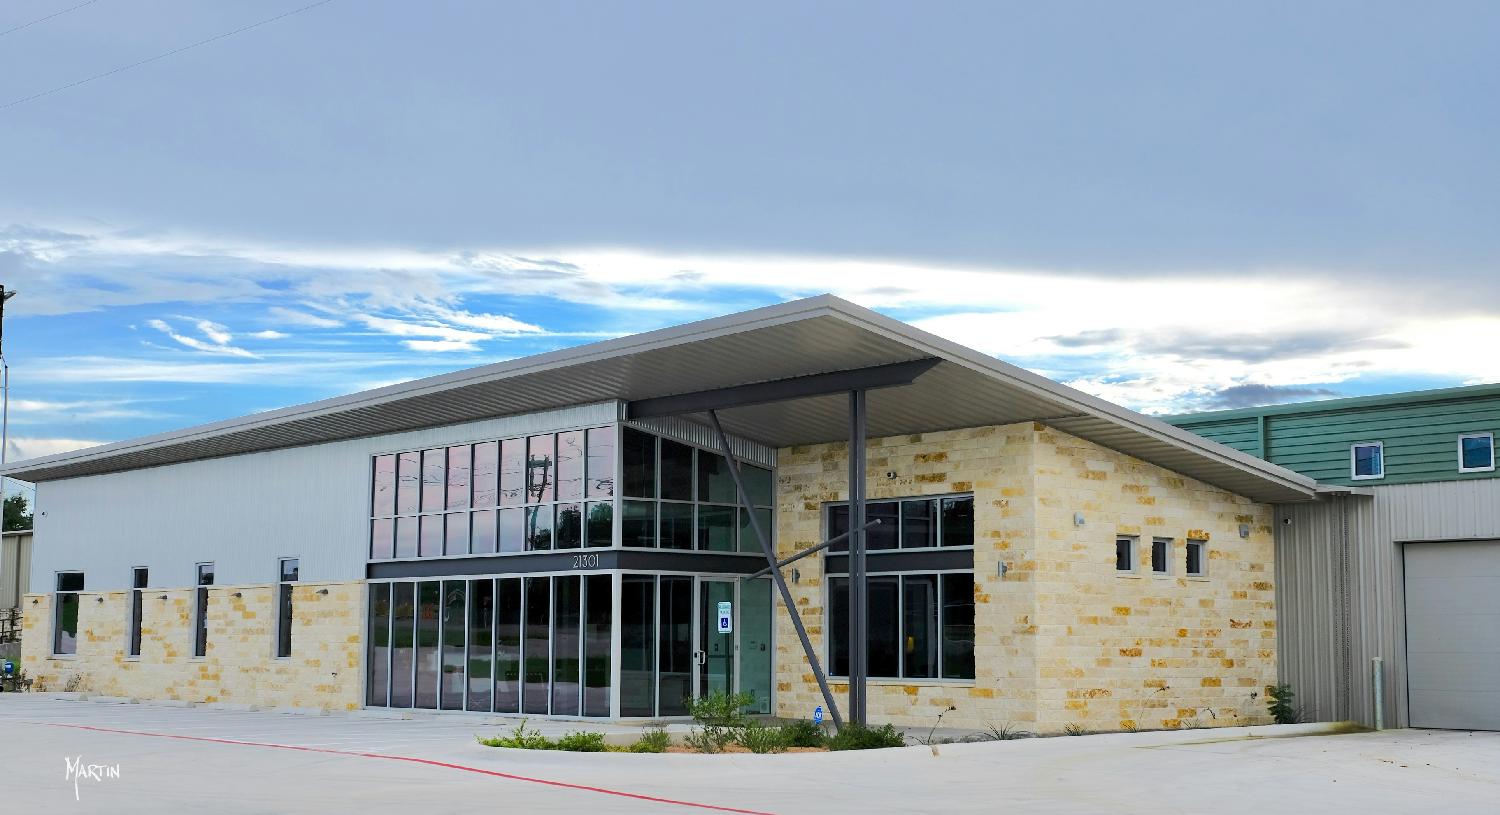 MCFI Headquarters located in Spicewood, TX